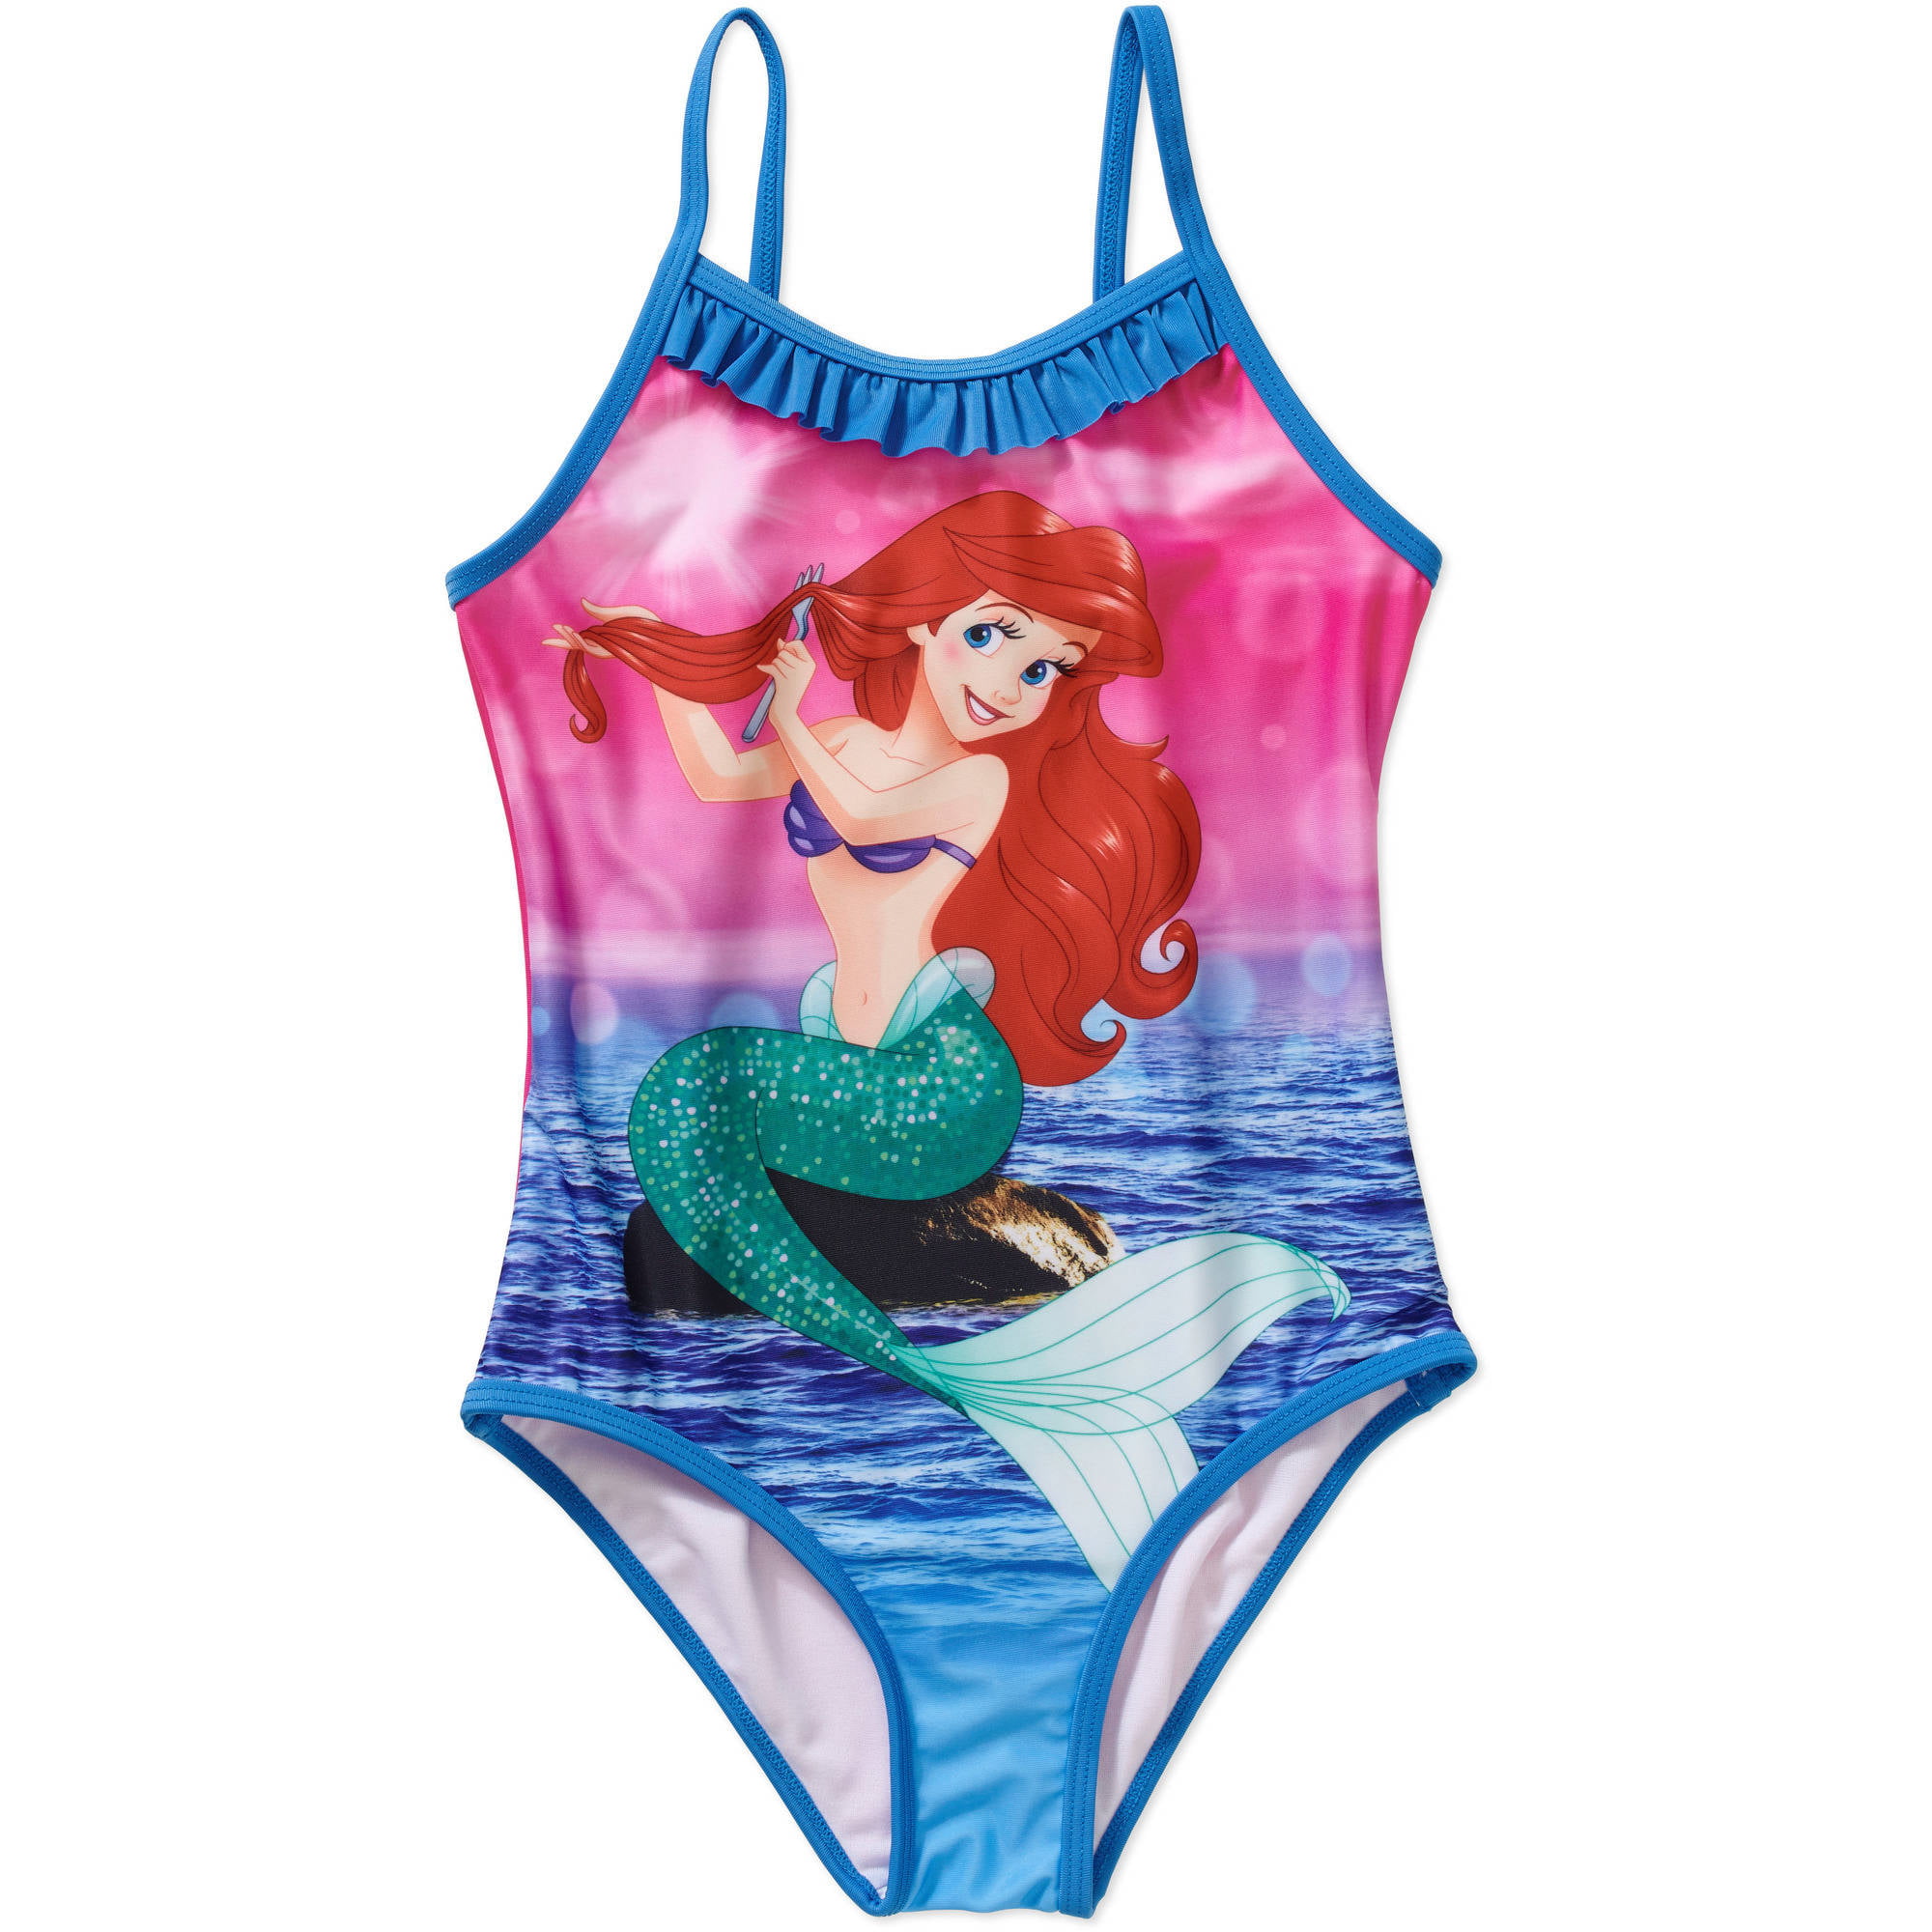 Girls Swimsuits Walmart : George Girls' 2-Piece Swimsuit | Walmart ...